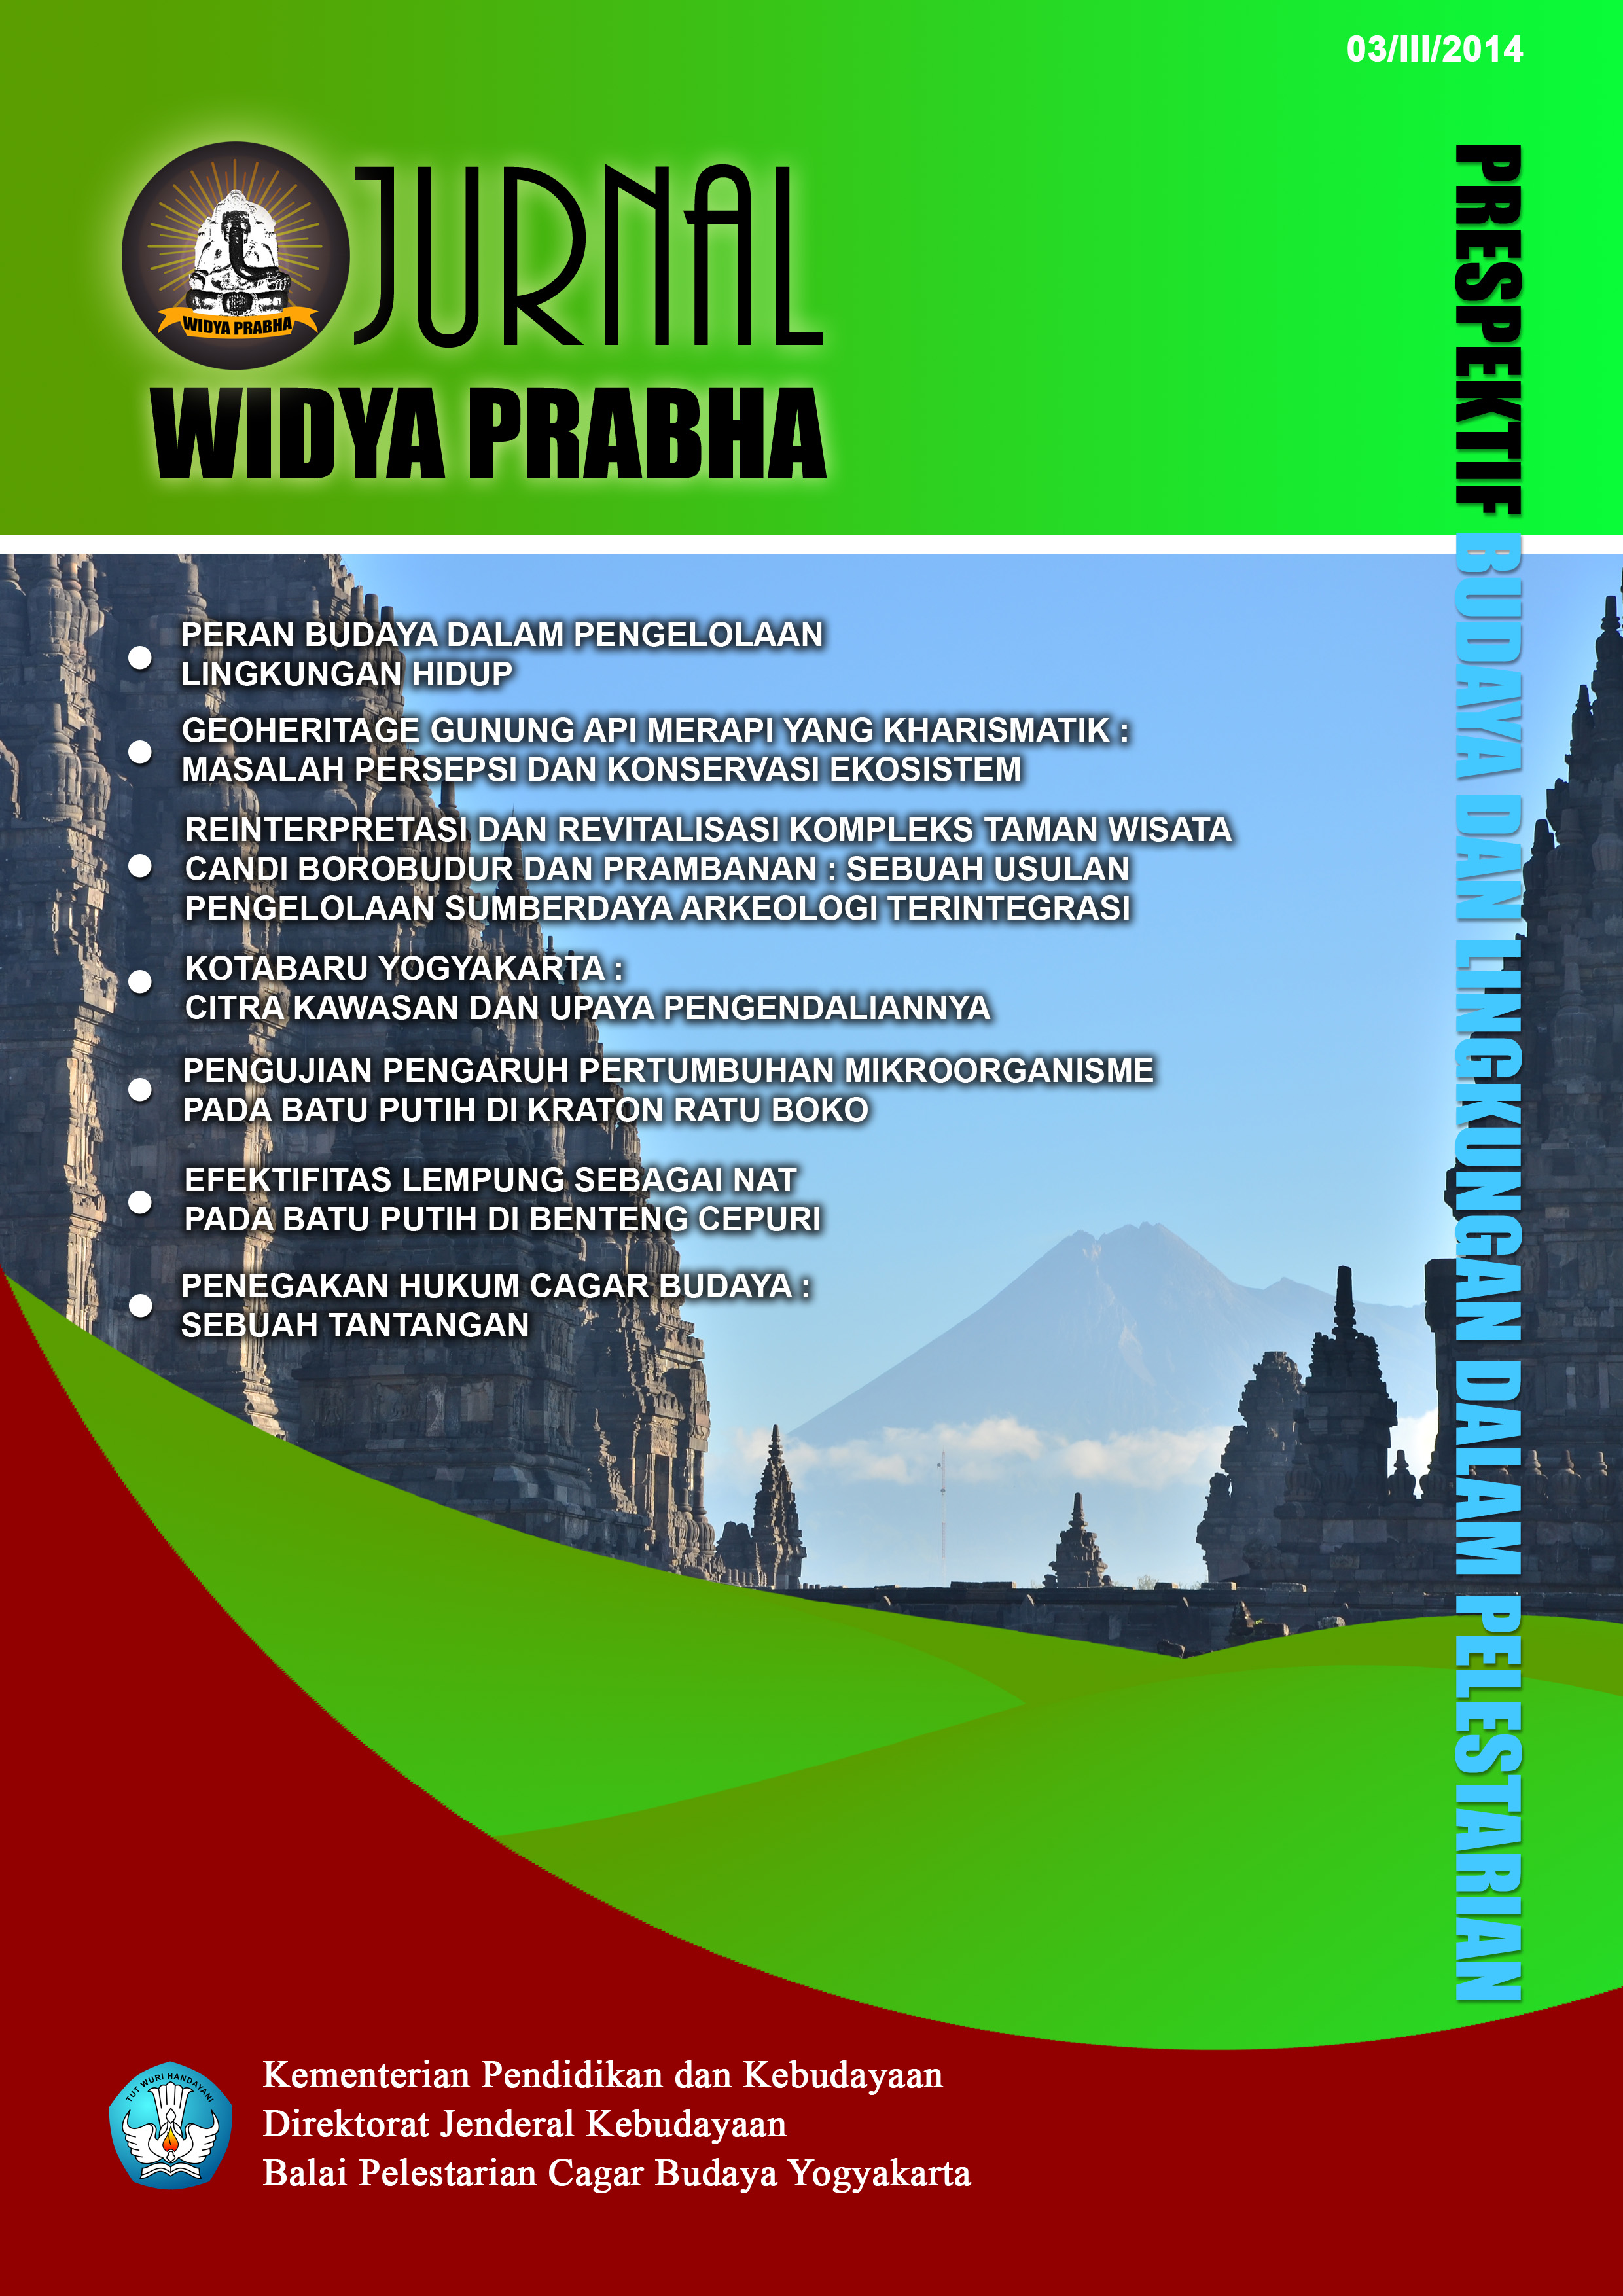 Read more about the article Jurnal Widya Prabha No. 03/III/2014